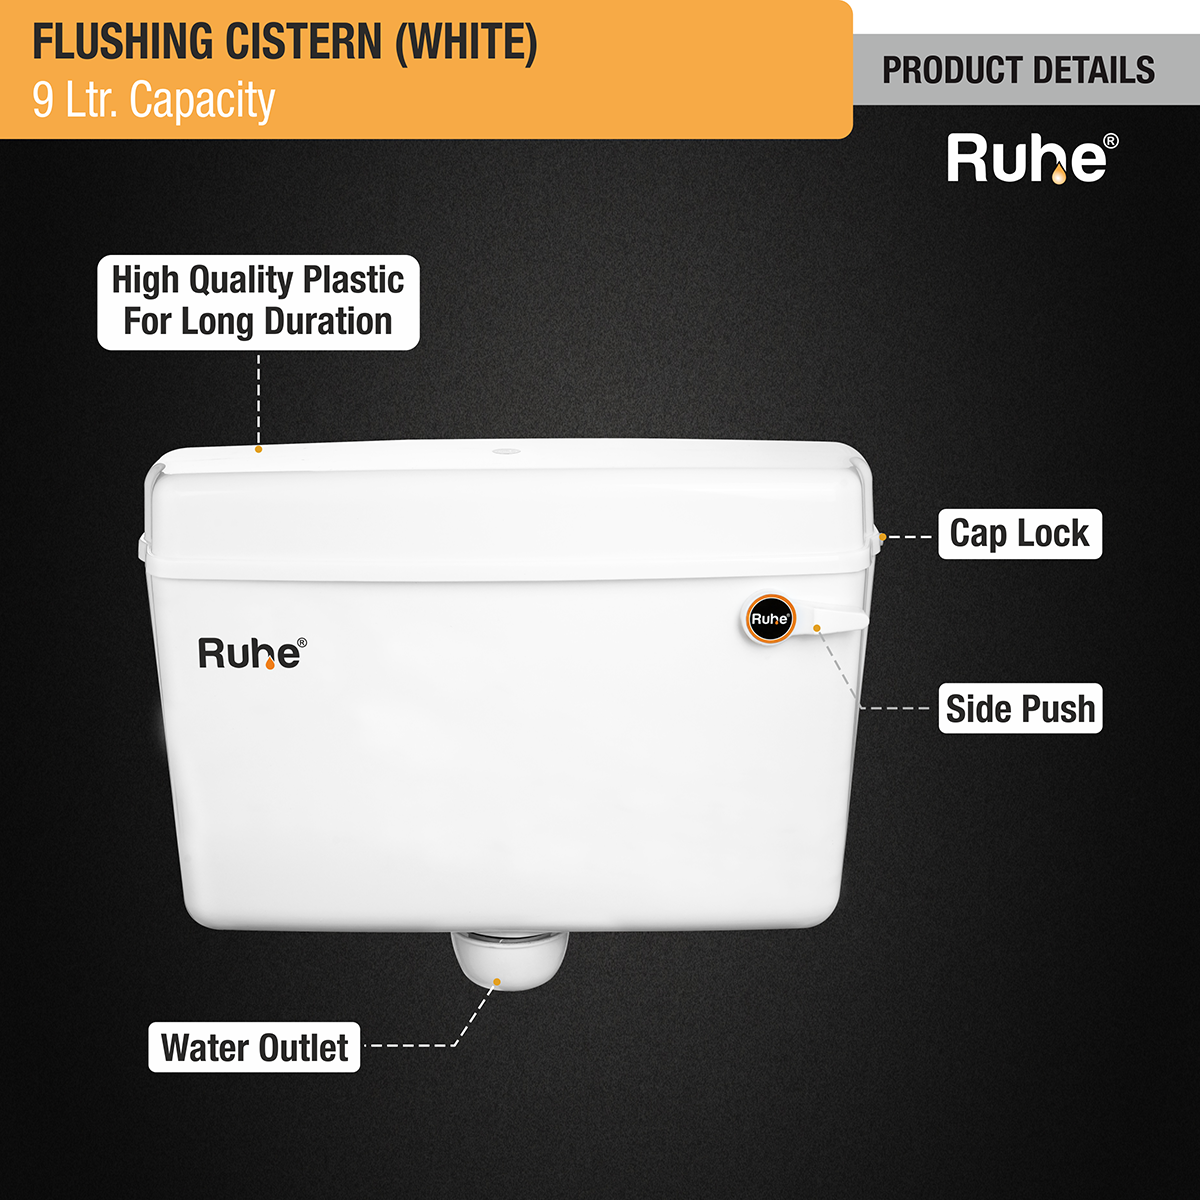 White Flushing Cistern (9 Ltr) product details